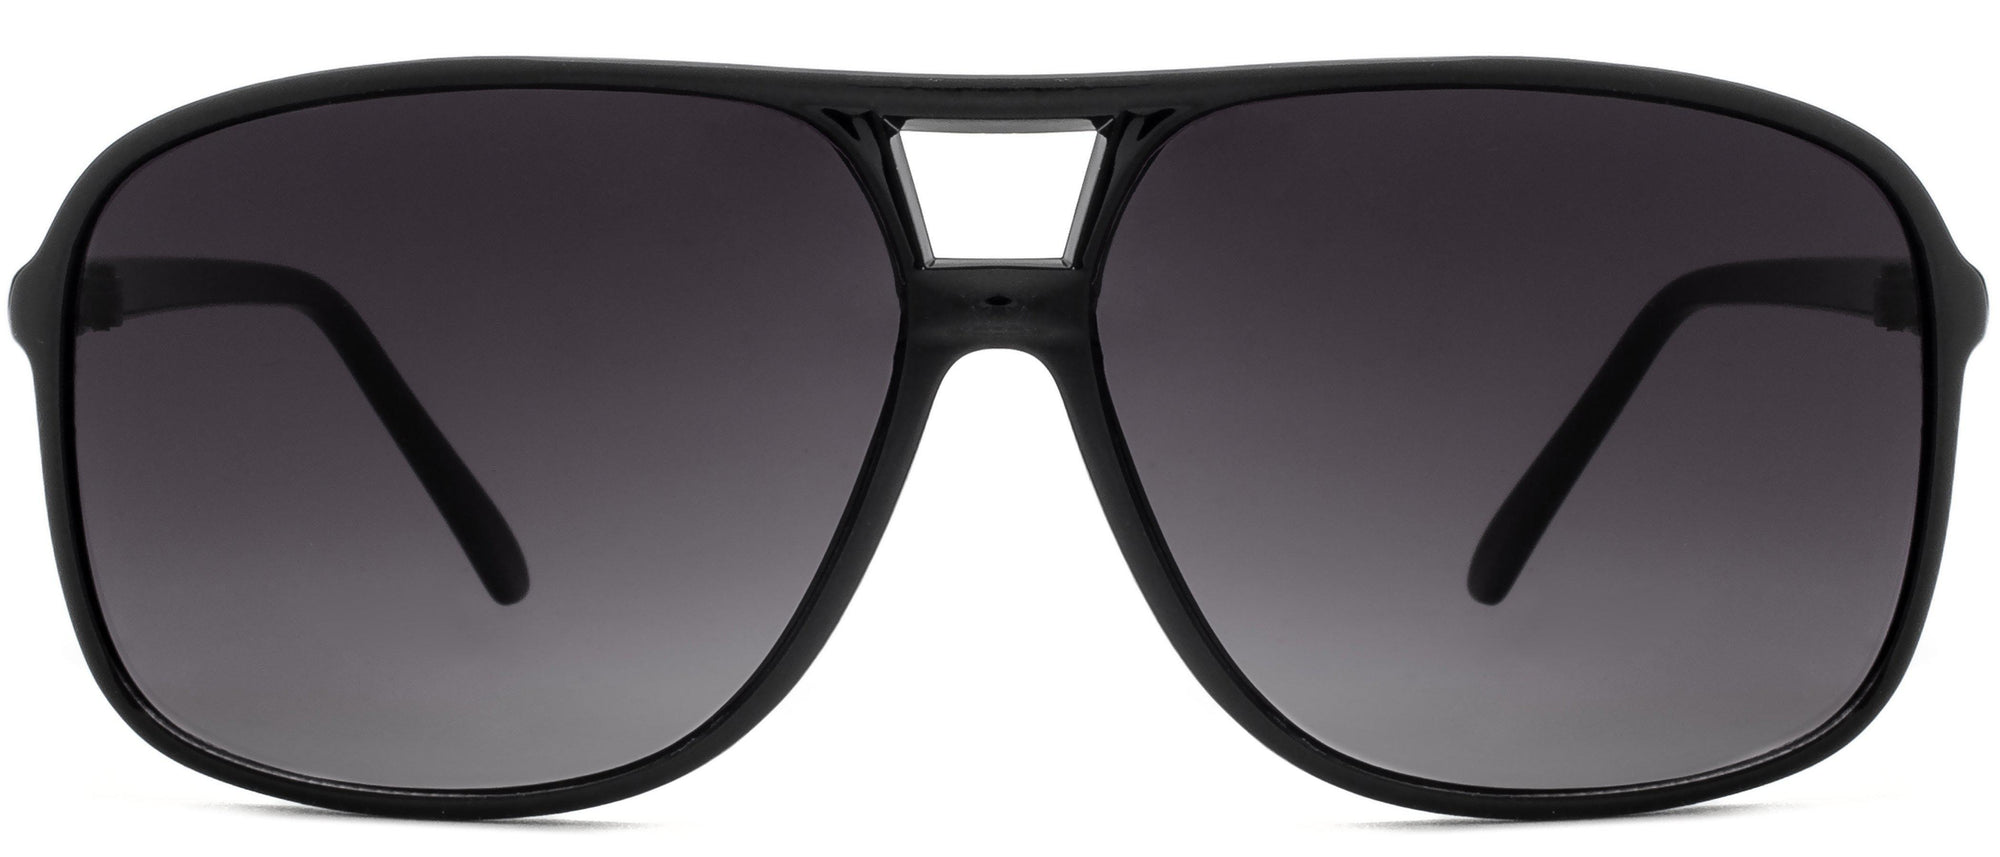 Hanover Square - Sunglasses NYS Collection Eyewear Black/Black